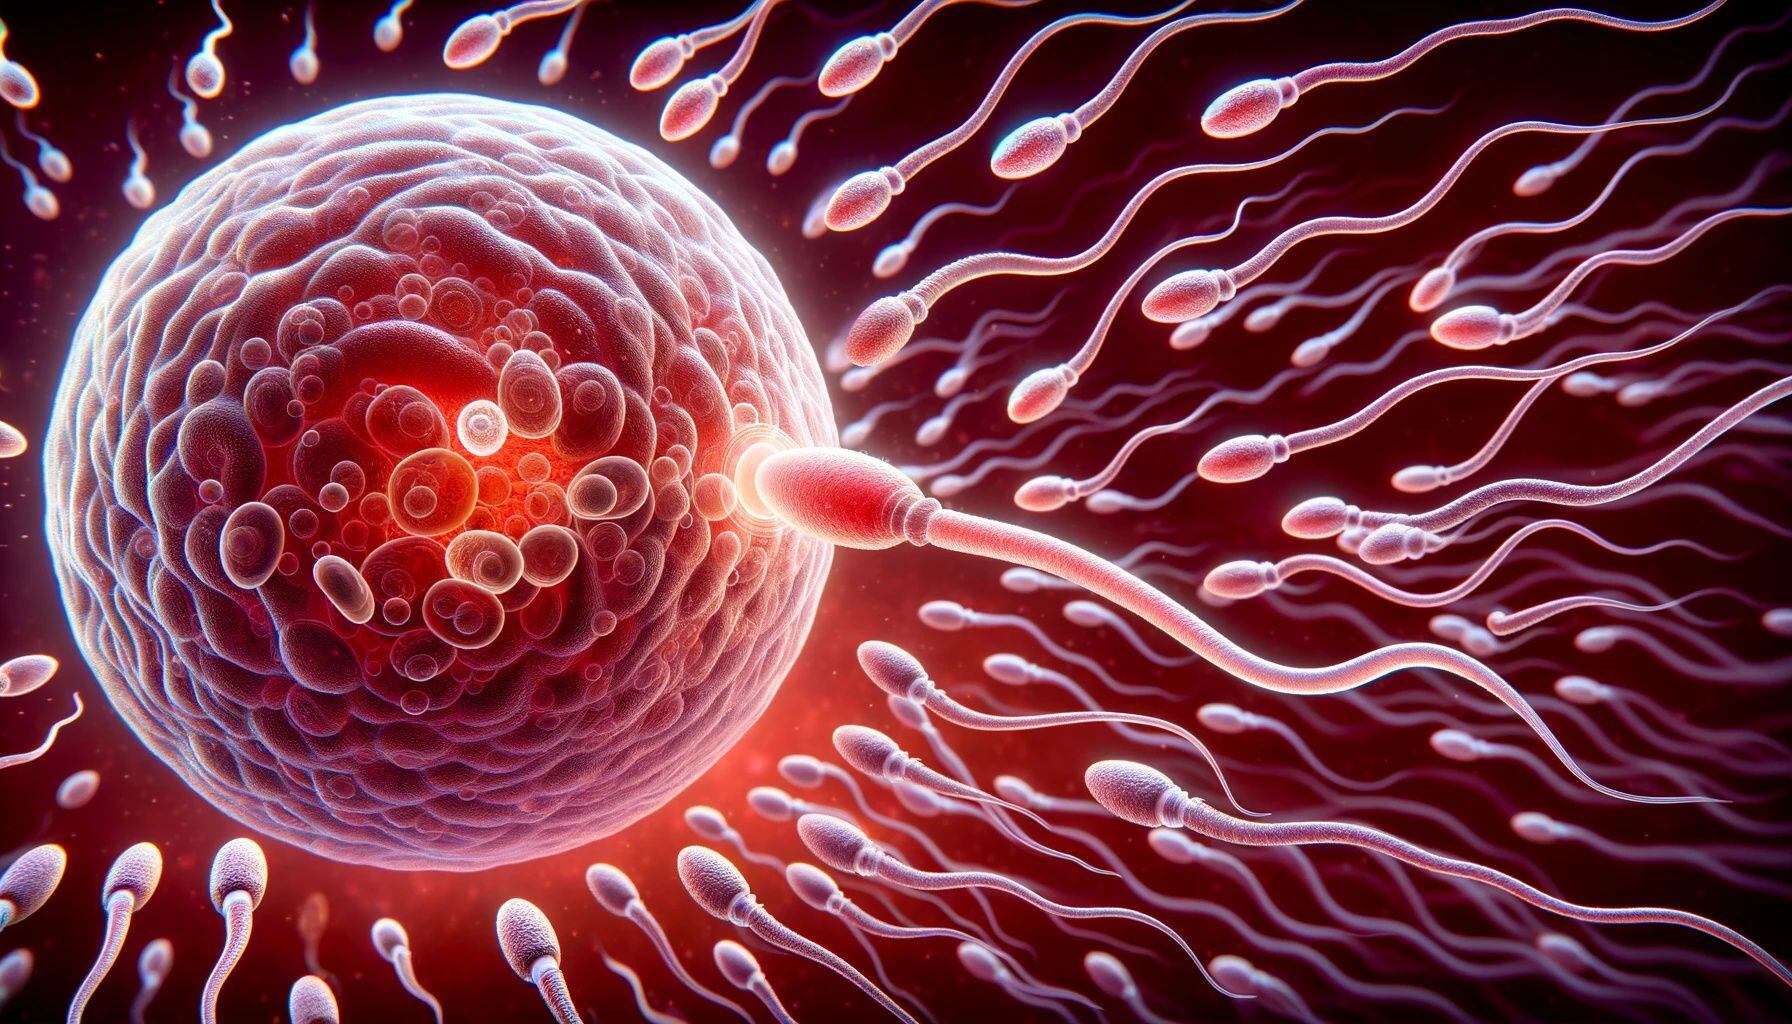 Un conjunto de espermatozoides yendo a fecundar un óvulo - (Imagen Ilustrativa Infobae)